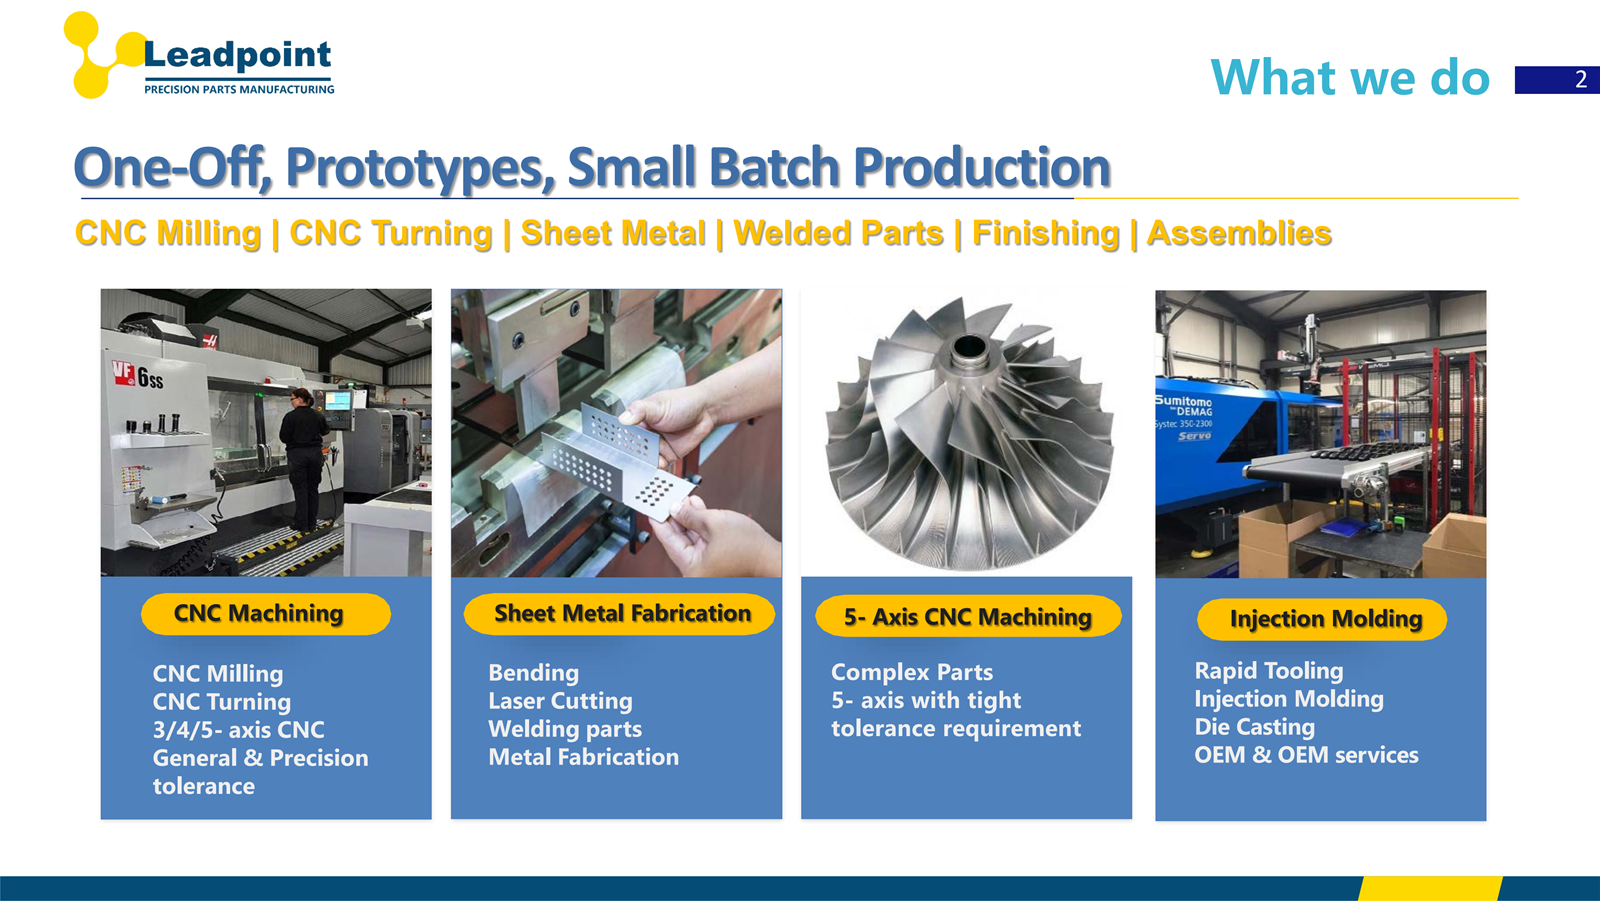 Precision CNC Machining Rapid Prototyping Sheet Metal Fabrication Welding and Custom Fabrication